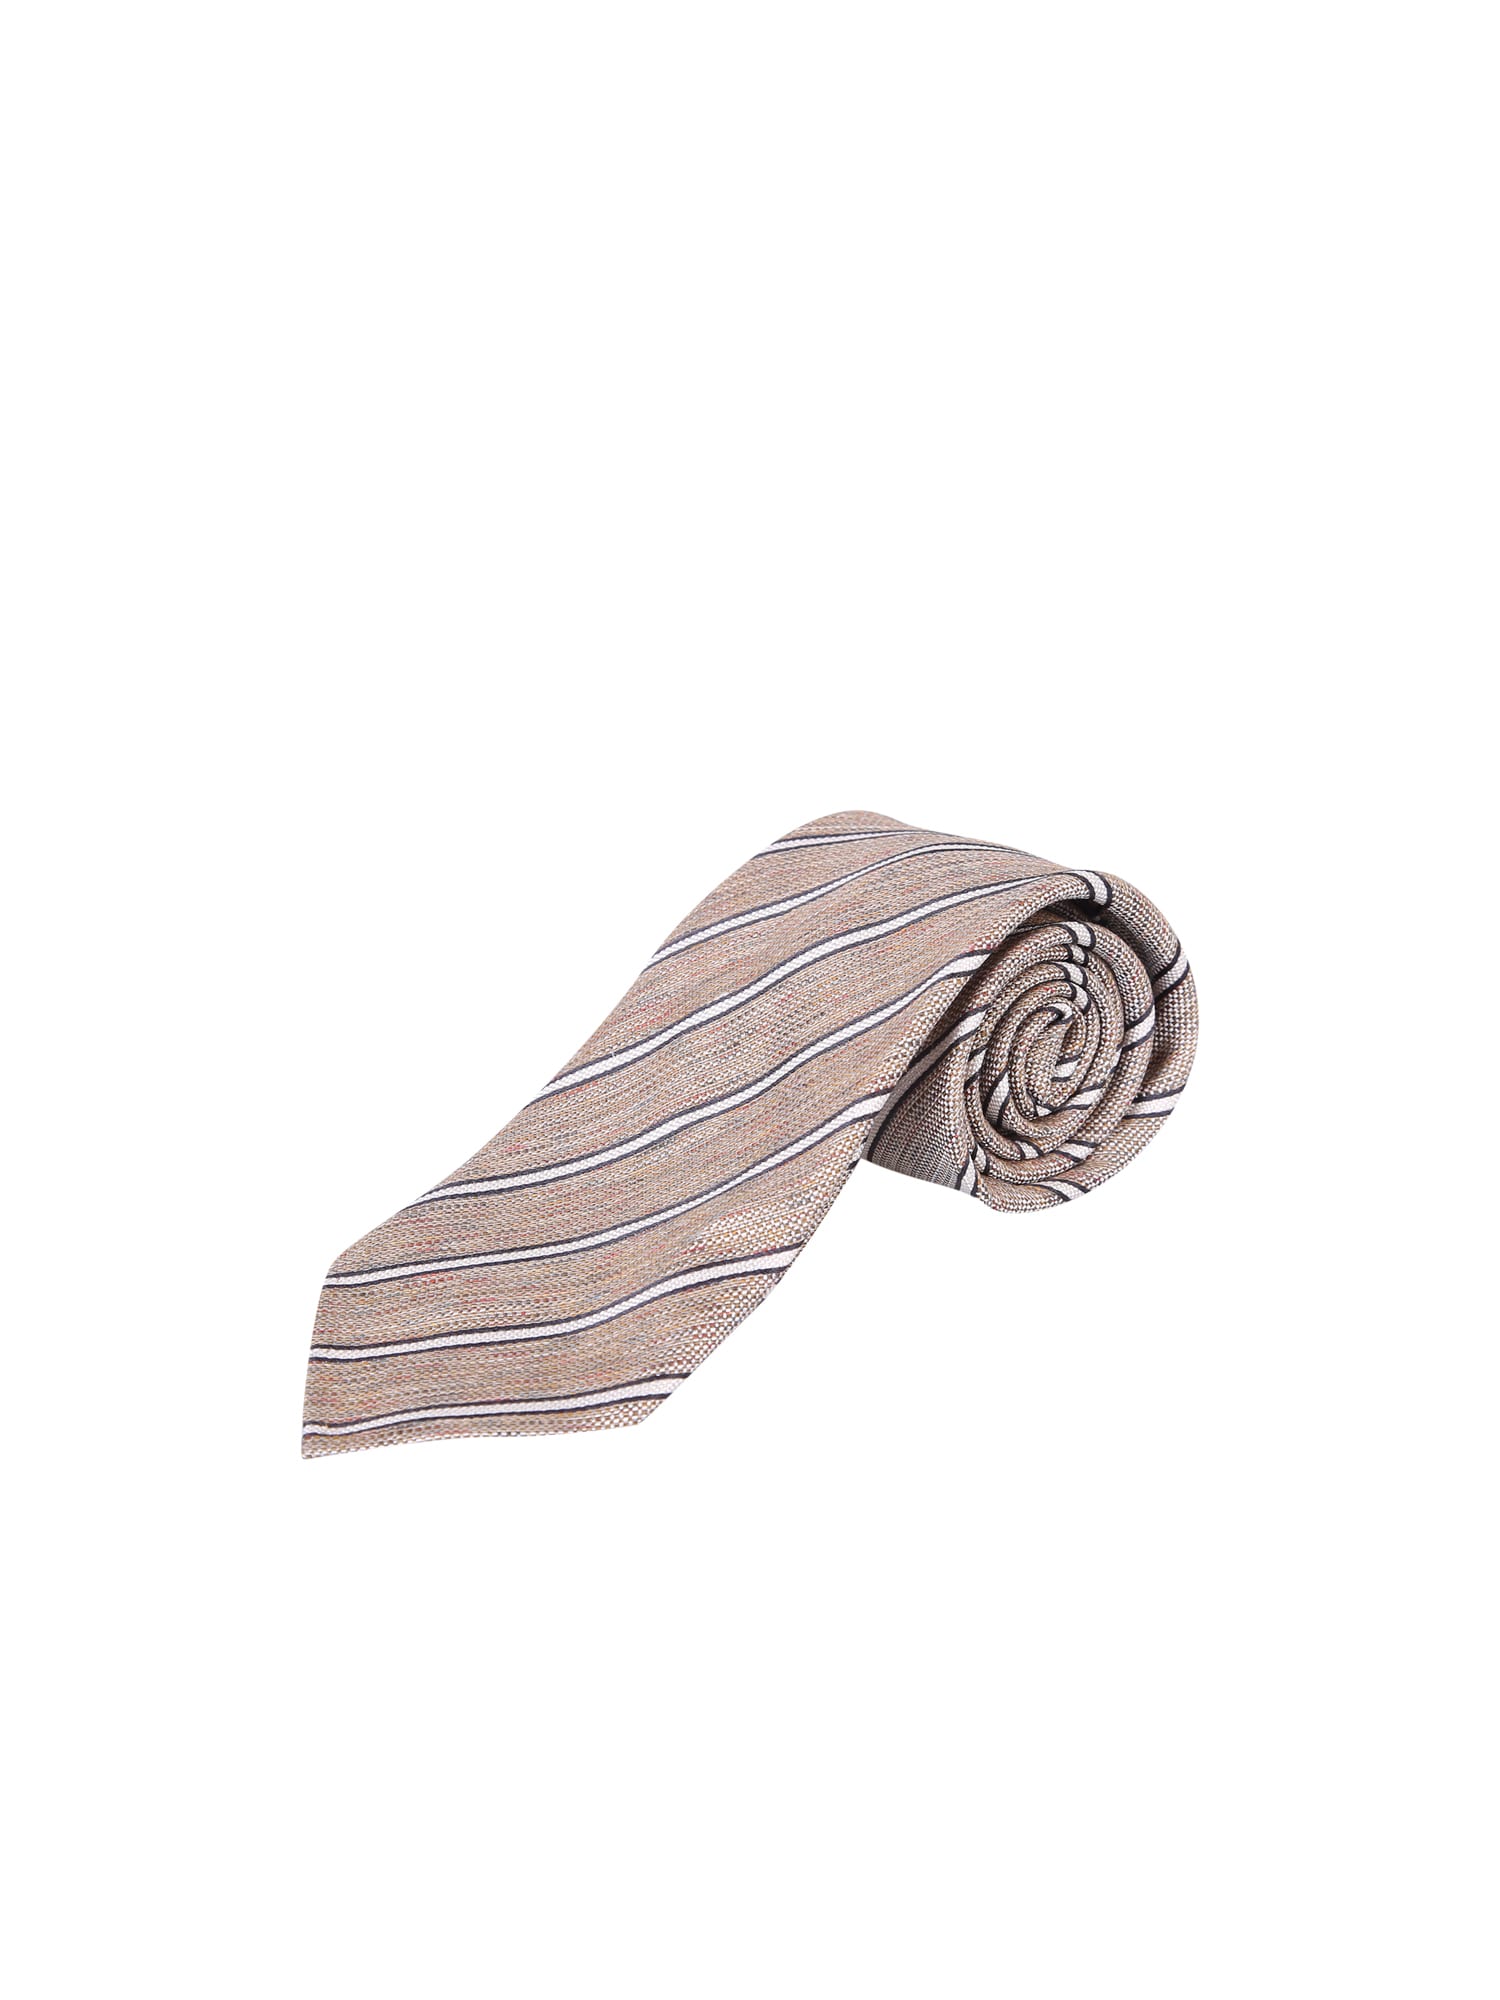 Lardini Striped Tie